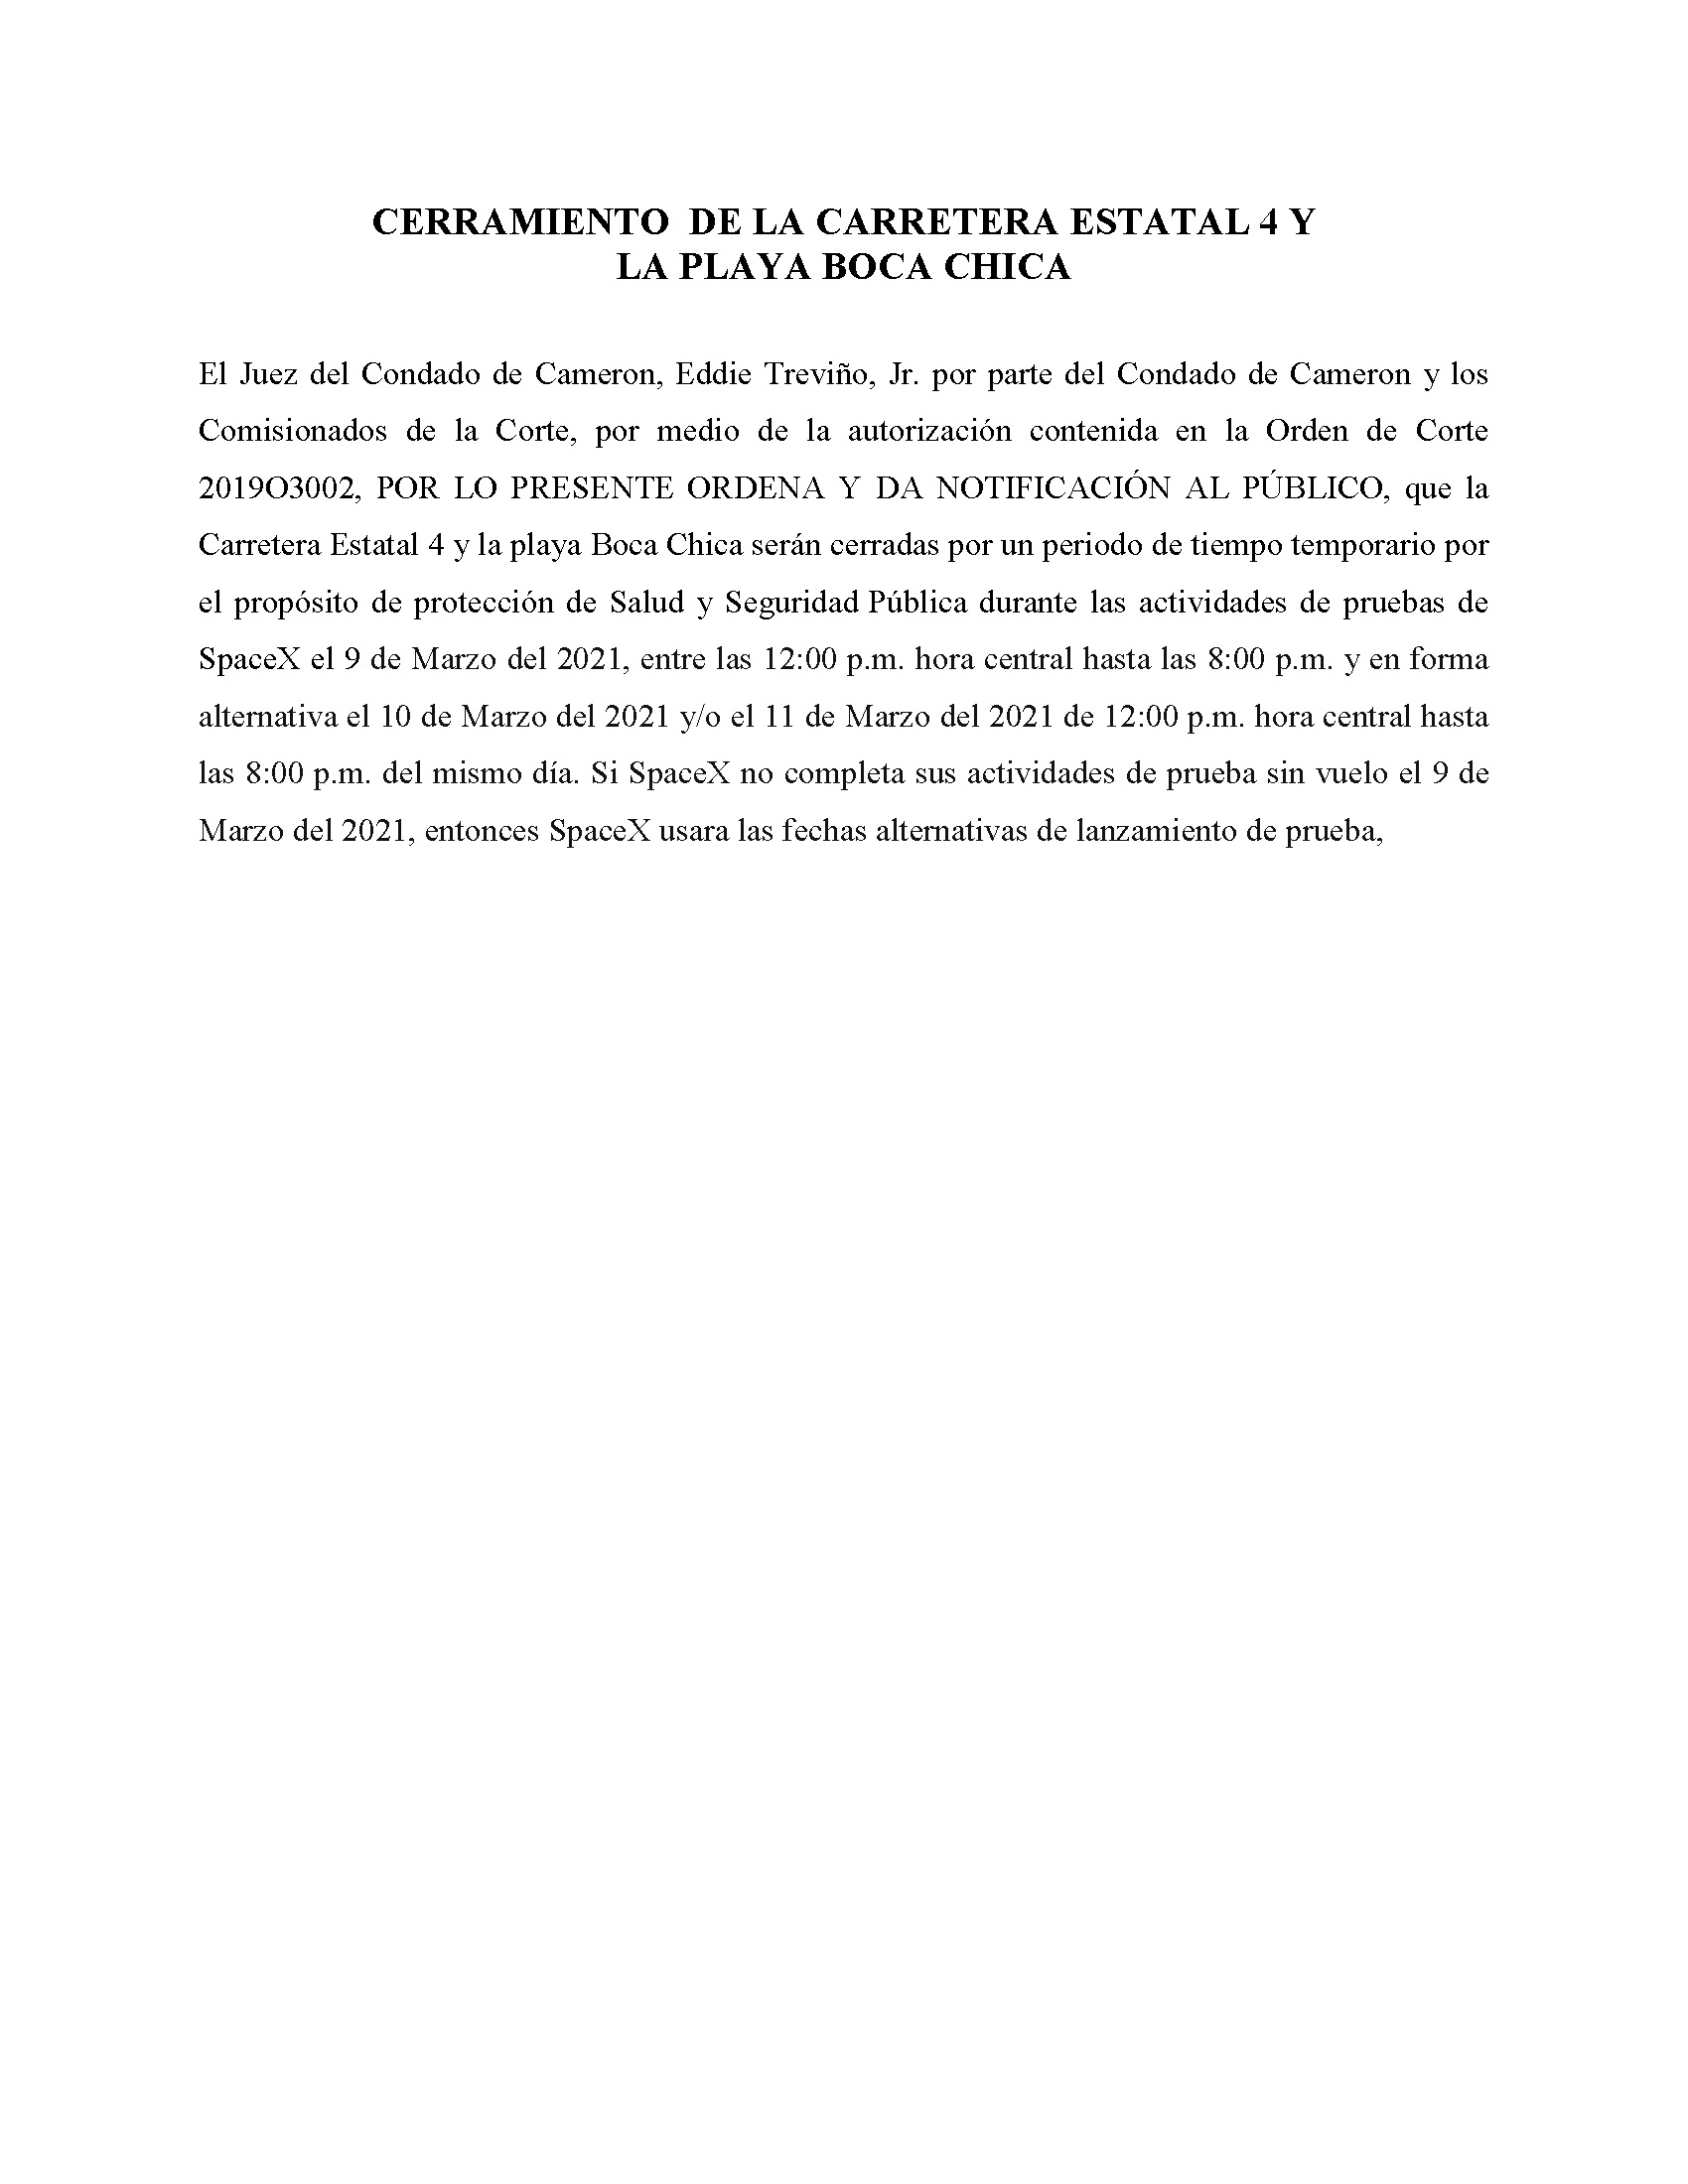 ORDER.CLOSURE OF HIGHWAY 4 Y LA PLAYA BOCA CHICA.SPANISH.03.09.2021